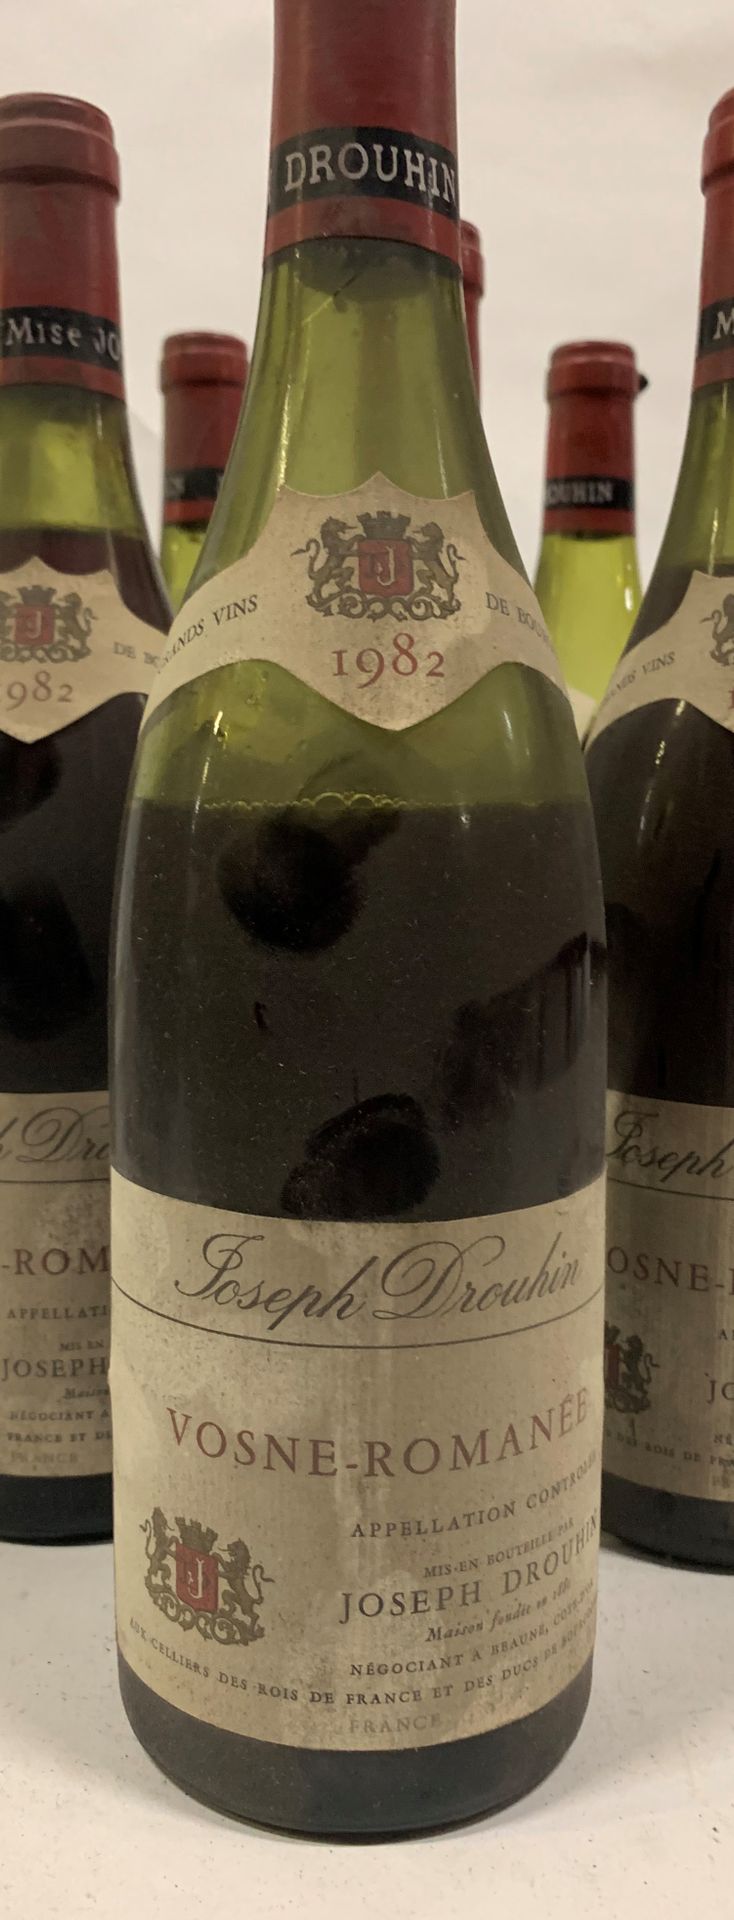 Null ● VOSNE-ROMANÉE | Joseph Drouhin, 1982

8 botellas (MB, B, V - ELS, ELA)

R&hellip;